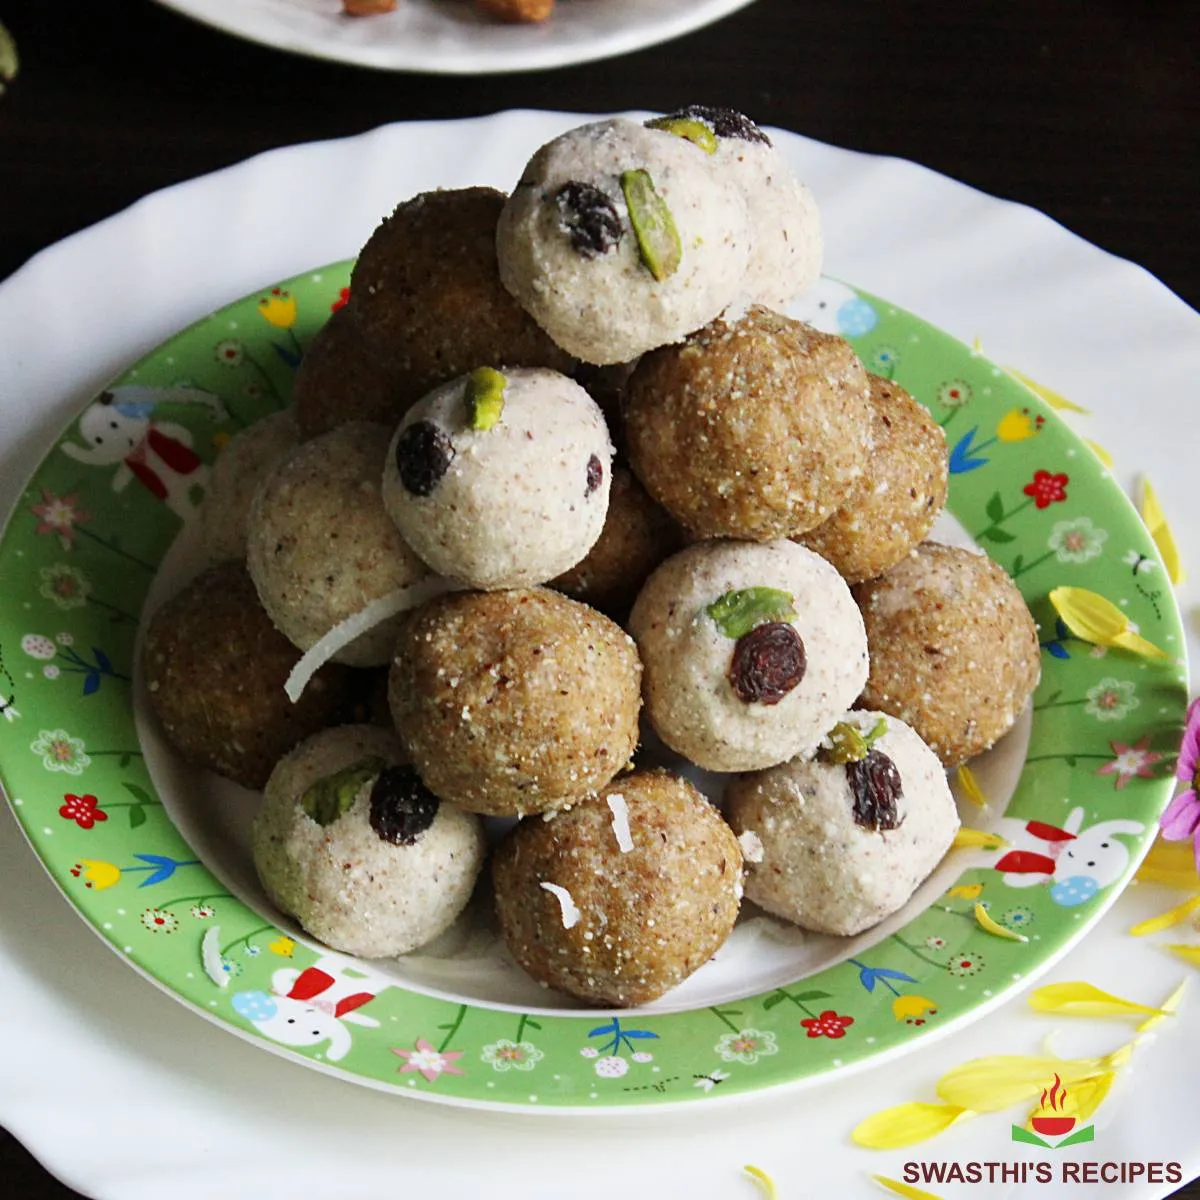 Badam Laddu - almond flour balls